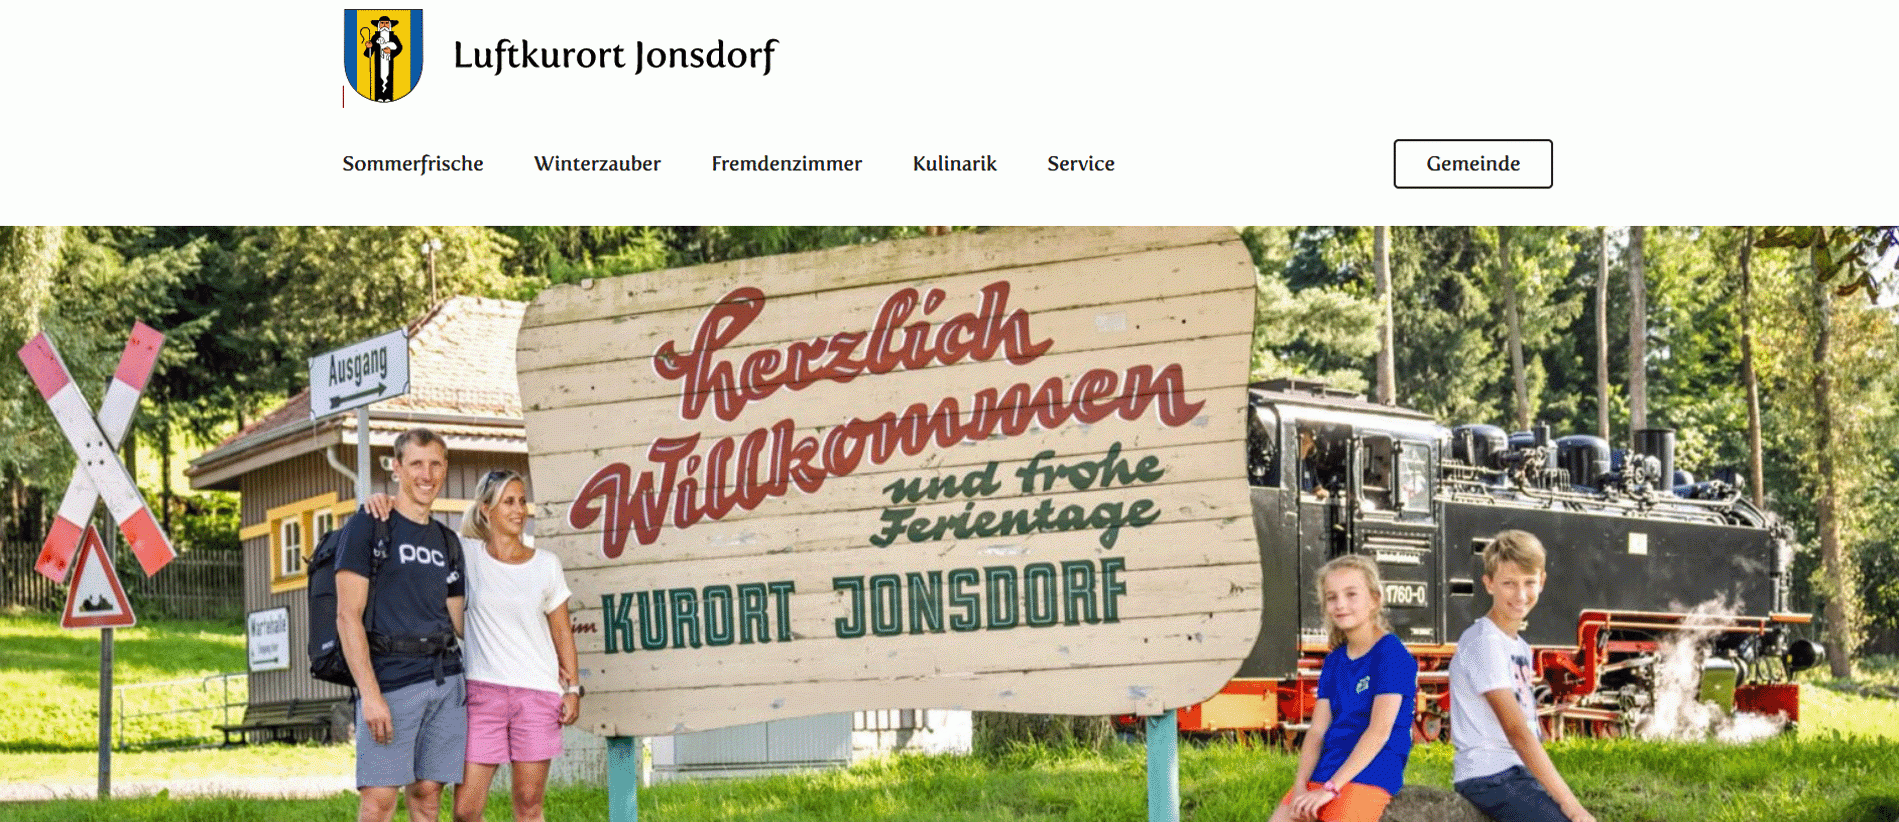 Kurort Jonsdorf